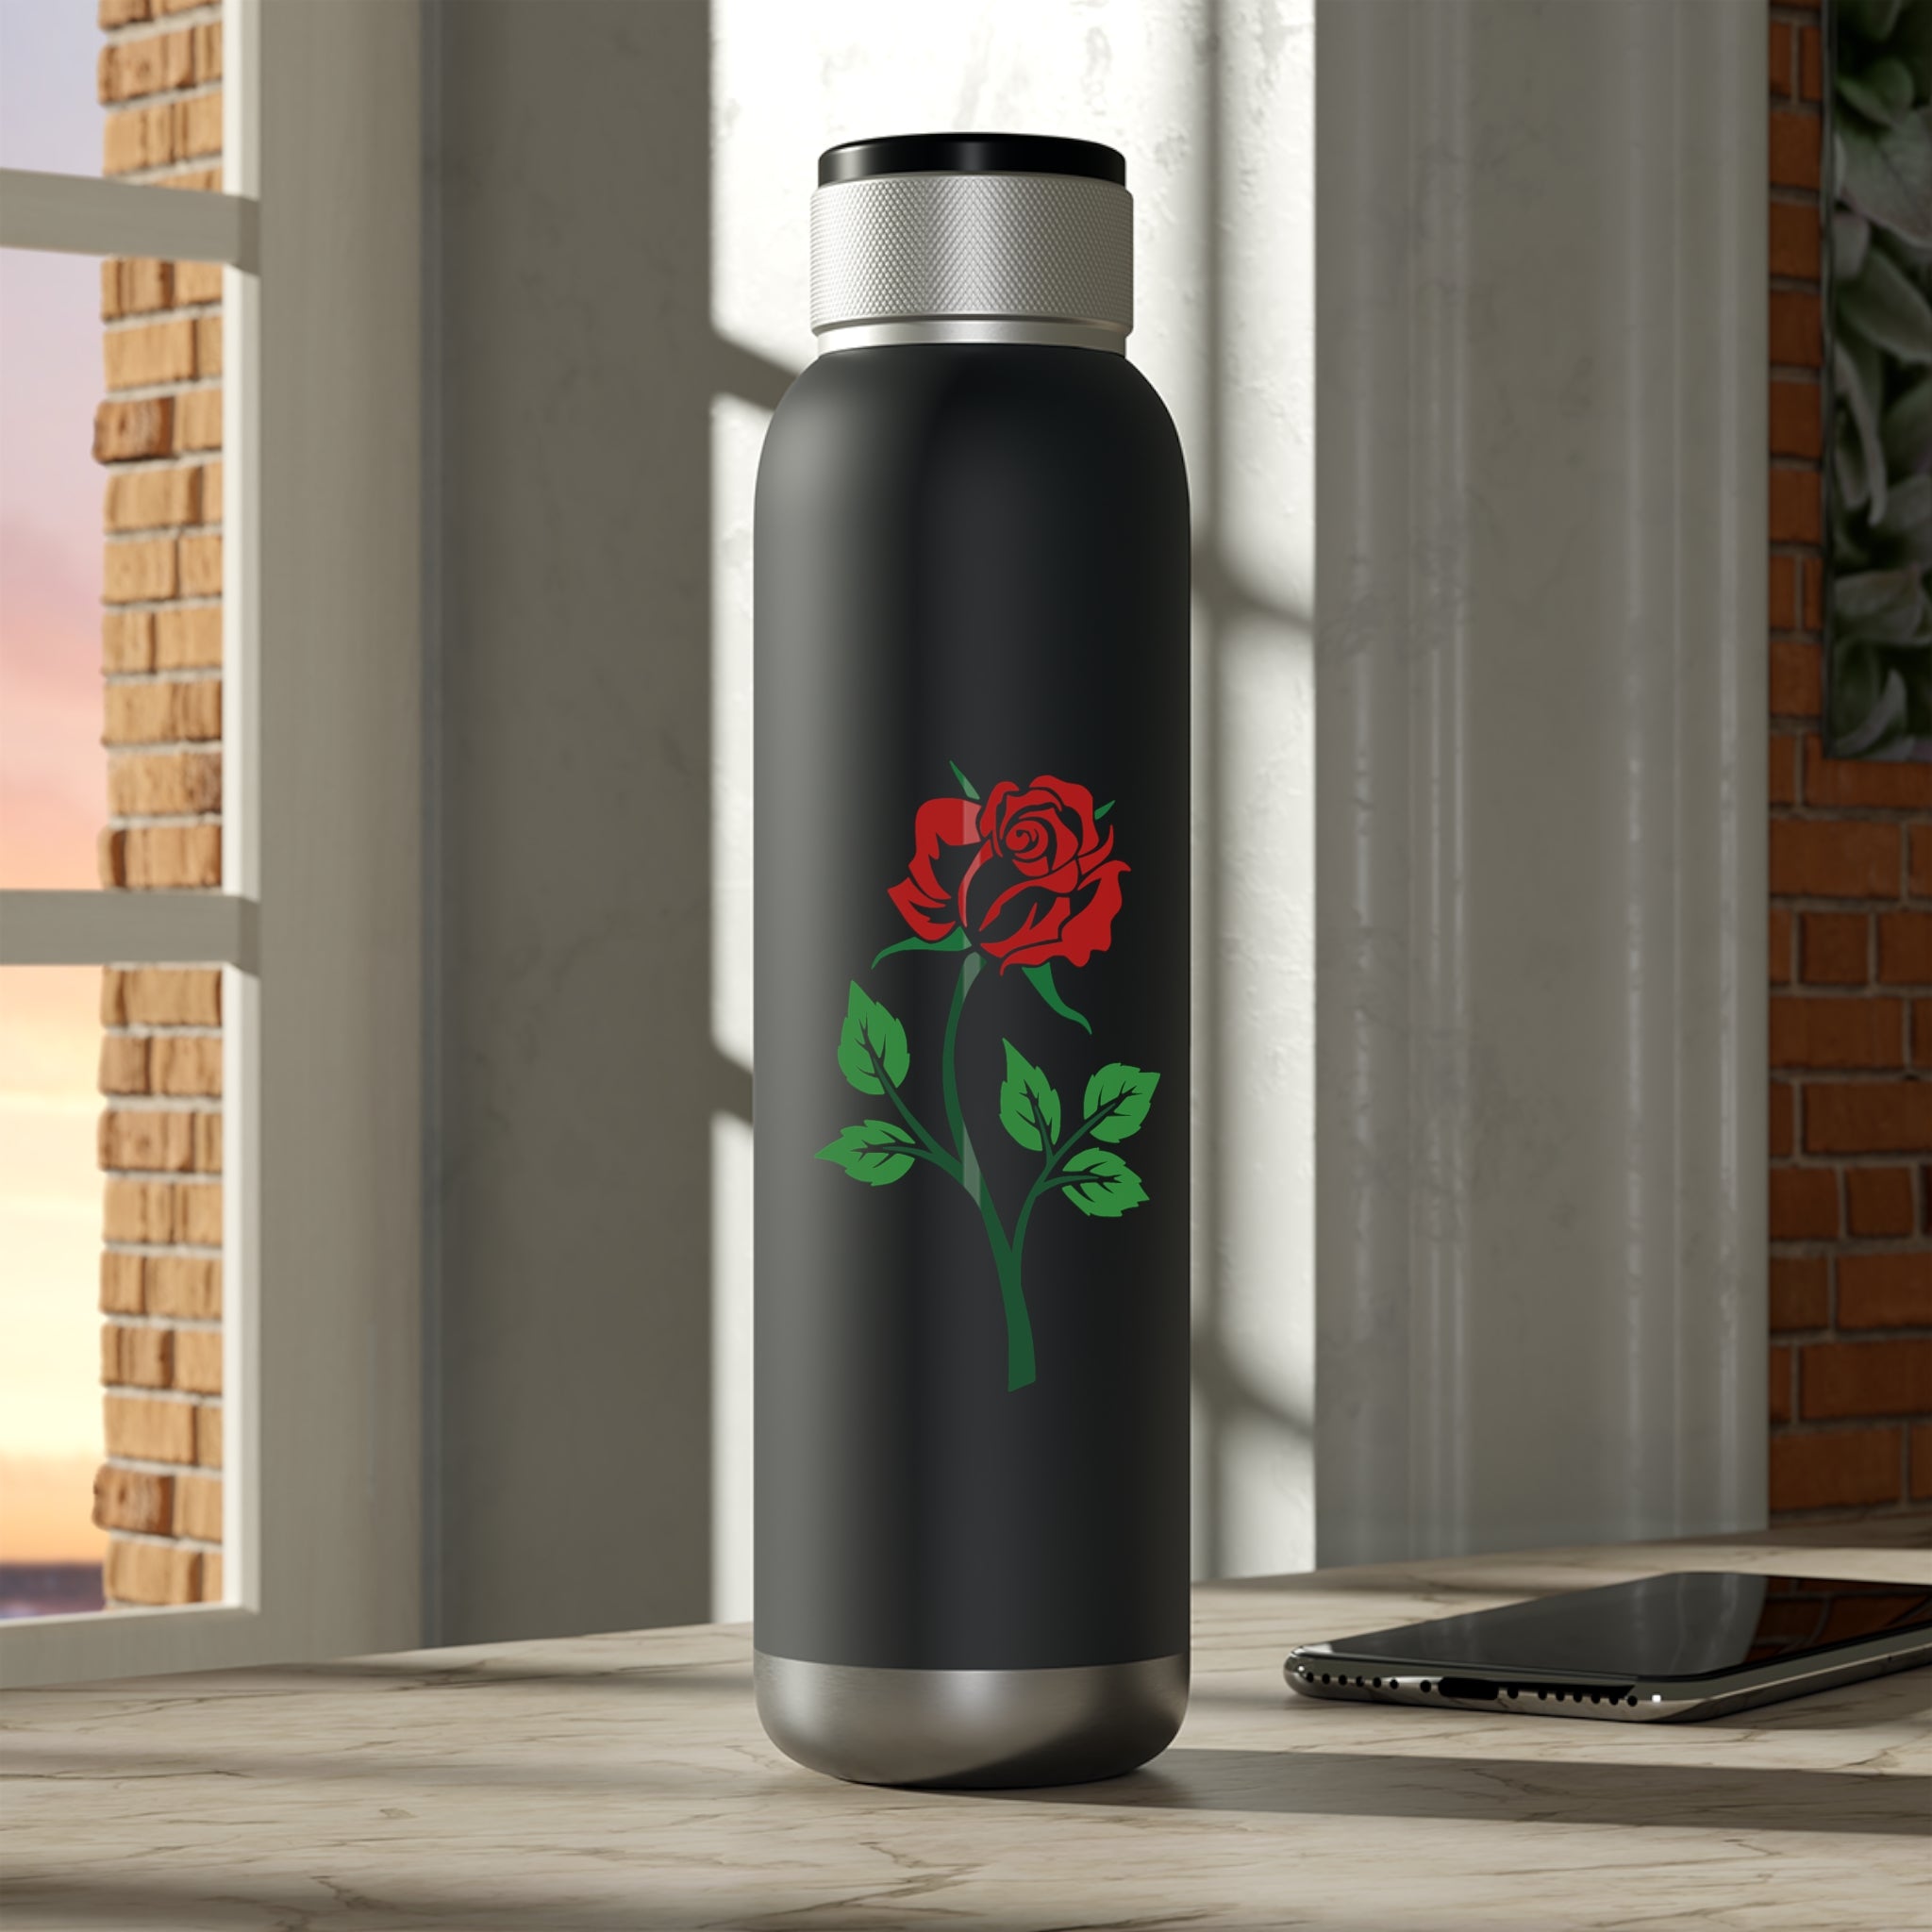 Soundwave Copper Vacuum Audio Bottle 22oz - Red Rose, 2 in 1 Water Bottle, Bluetooth Speaker Bottle, Black Portable